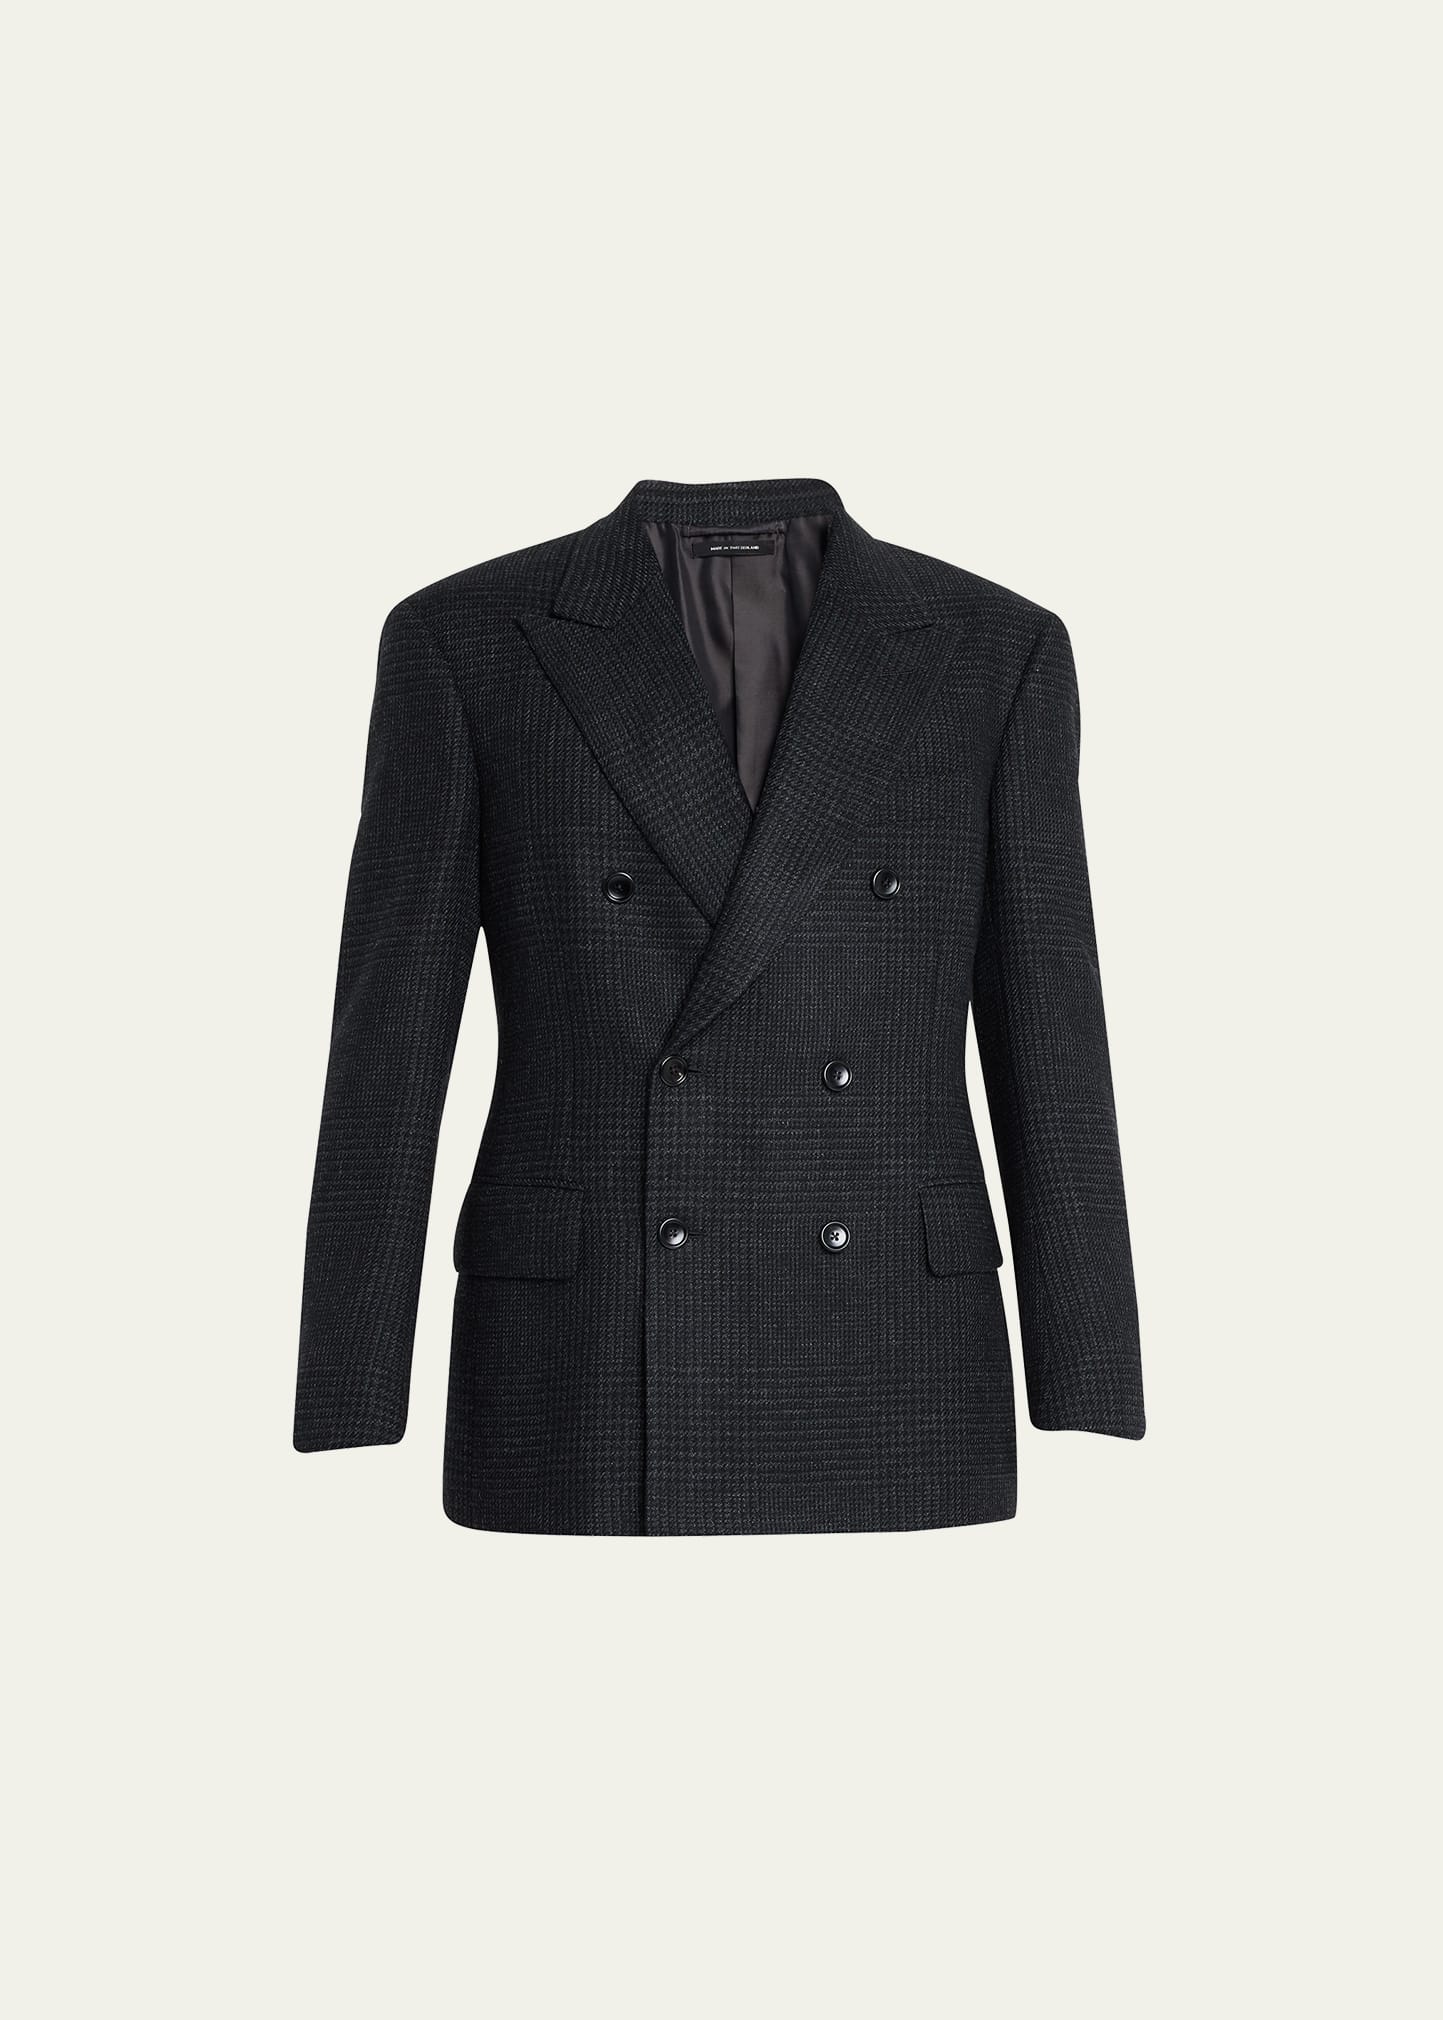 Tom Ford Men's Wool-blend Check Suit In Dark Gray